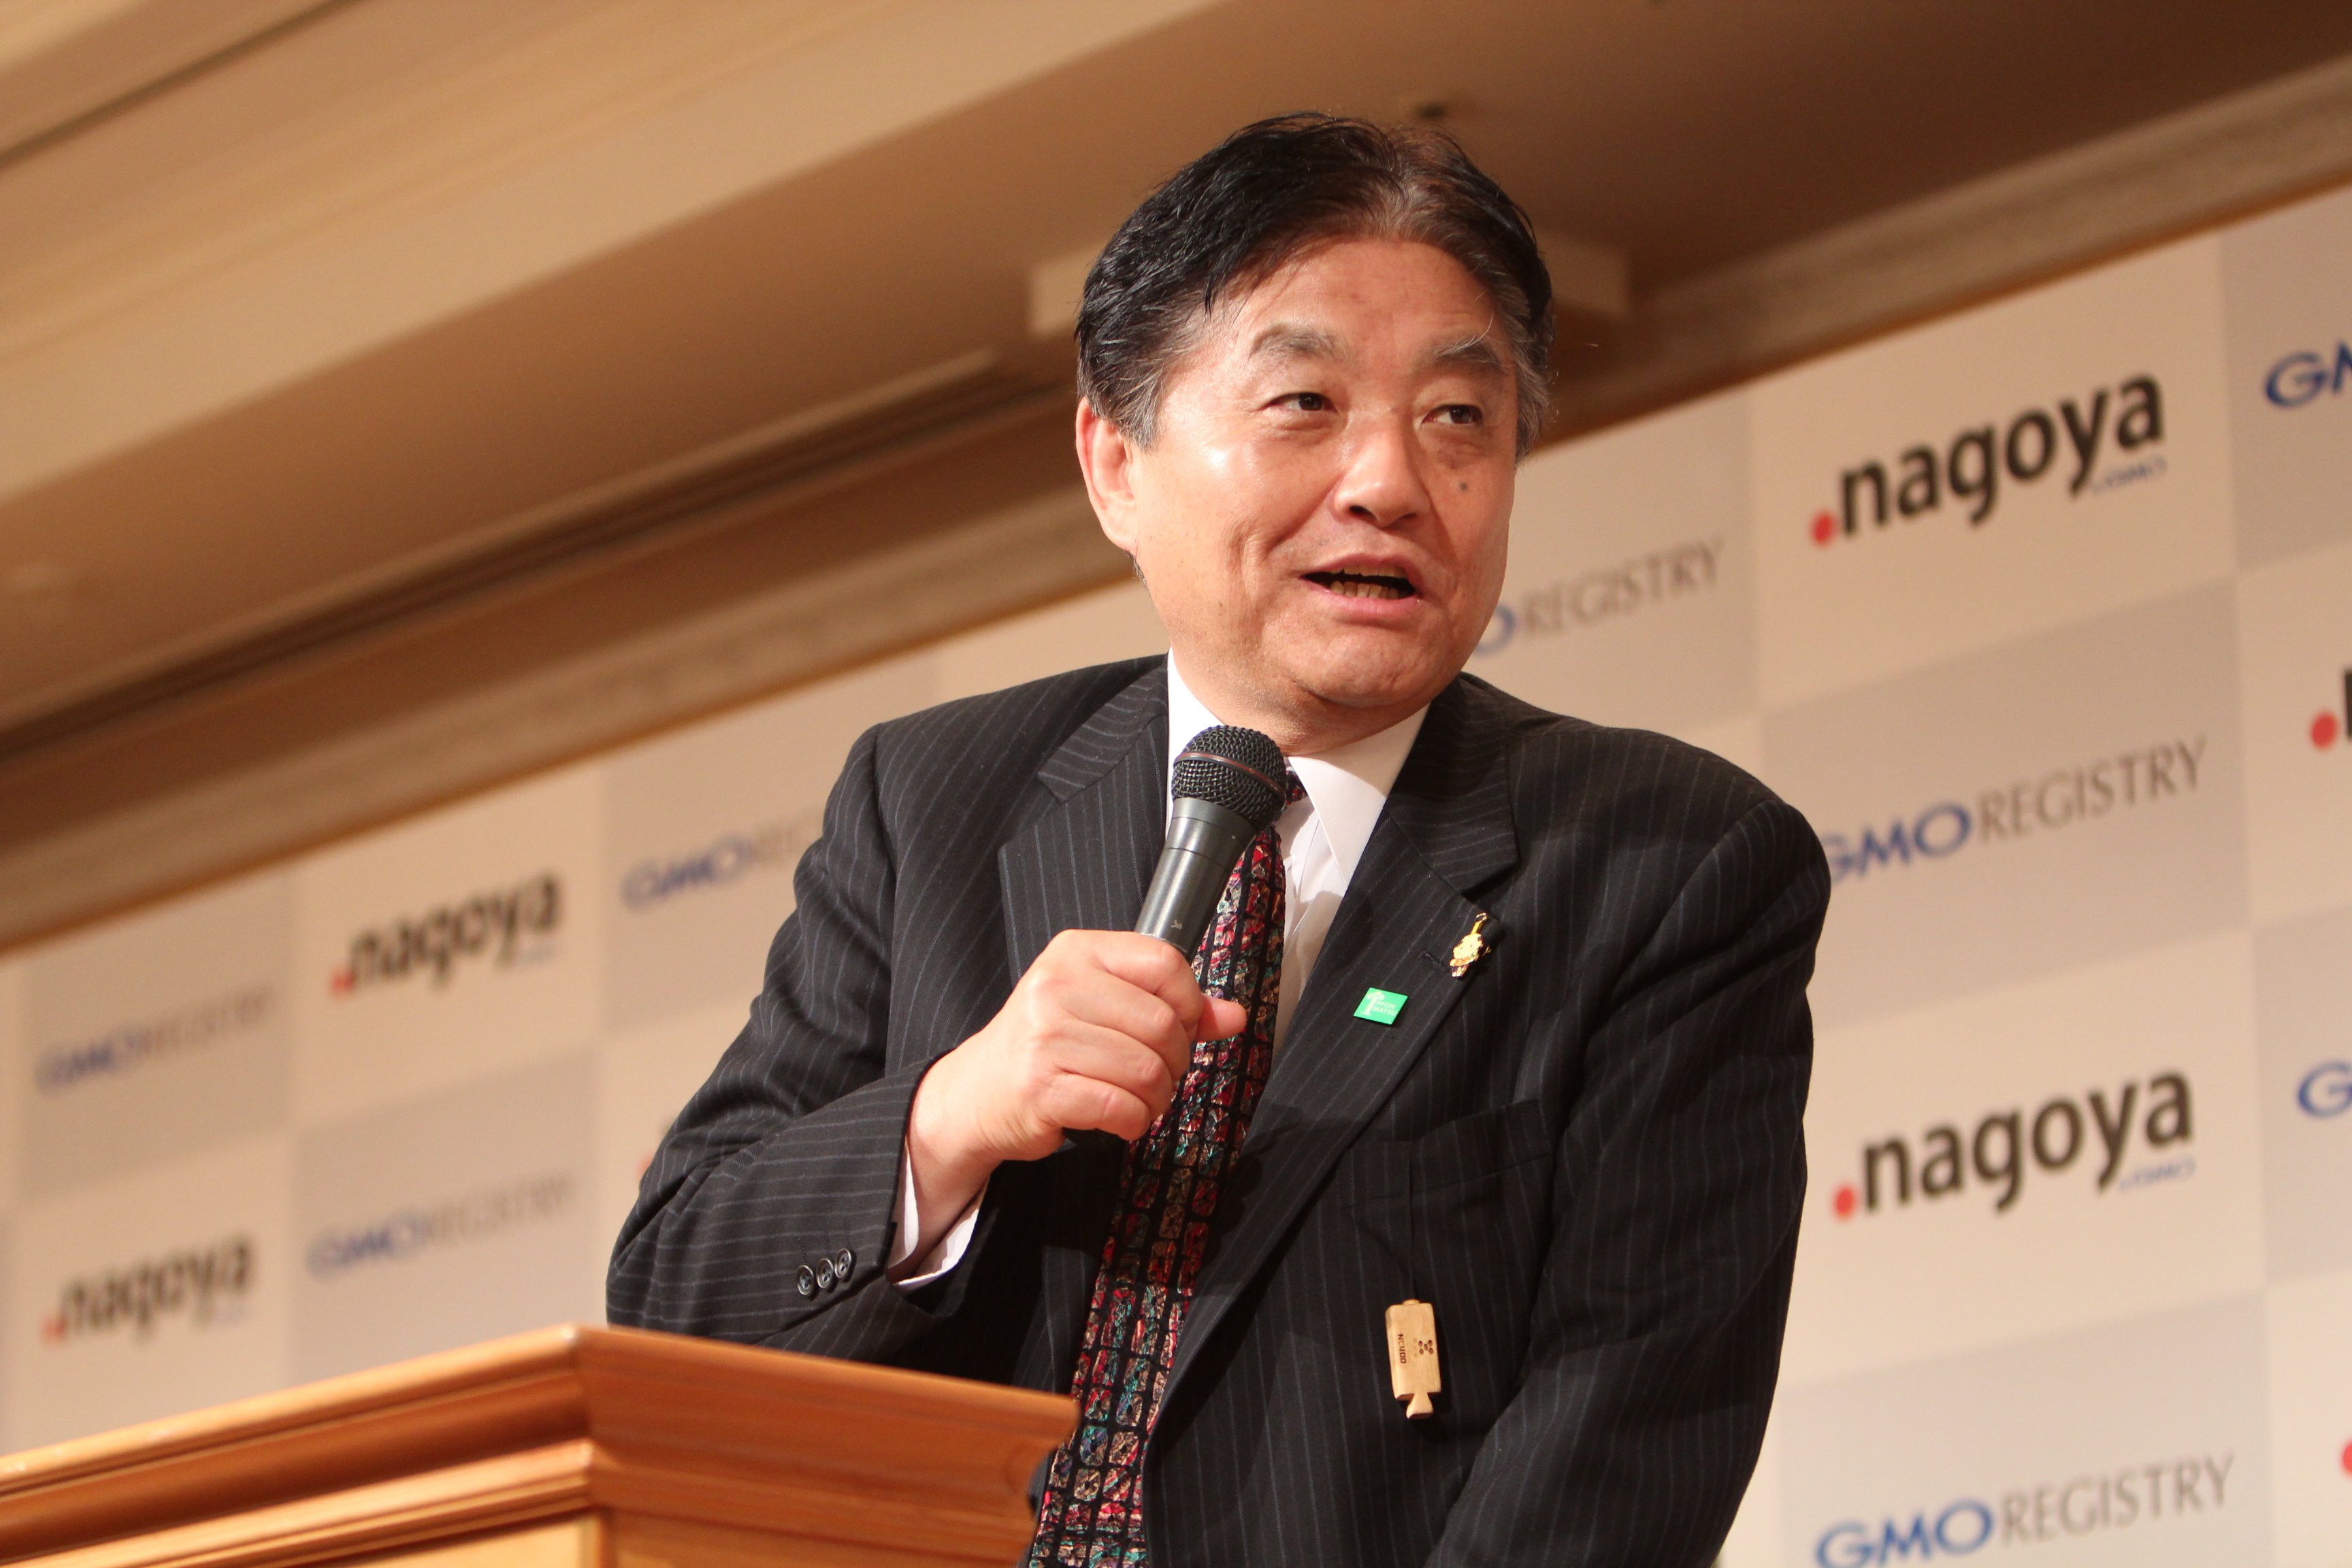 City of Nagoya Mayor, Takashi Kawamura talks about .nagoya